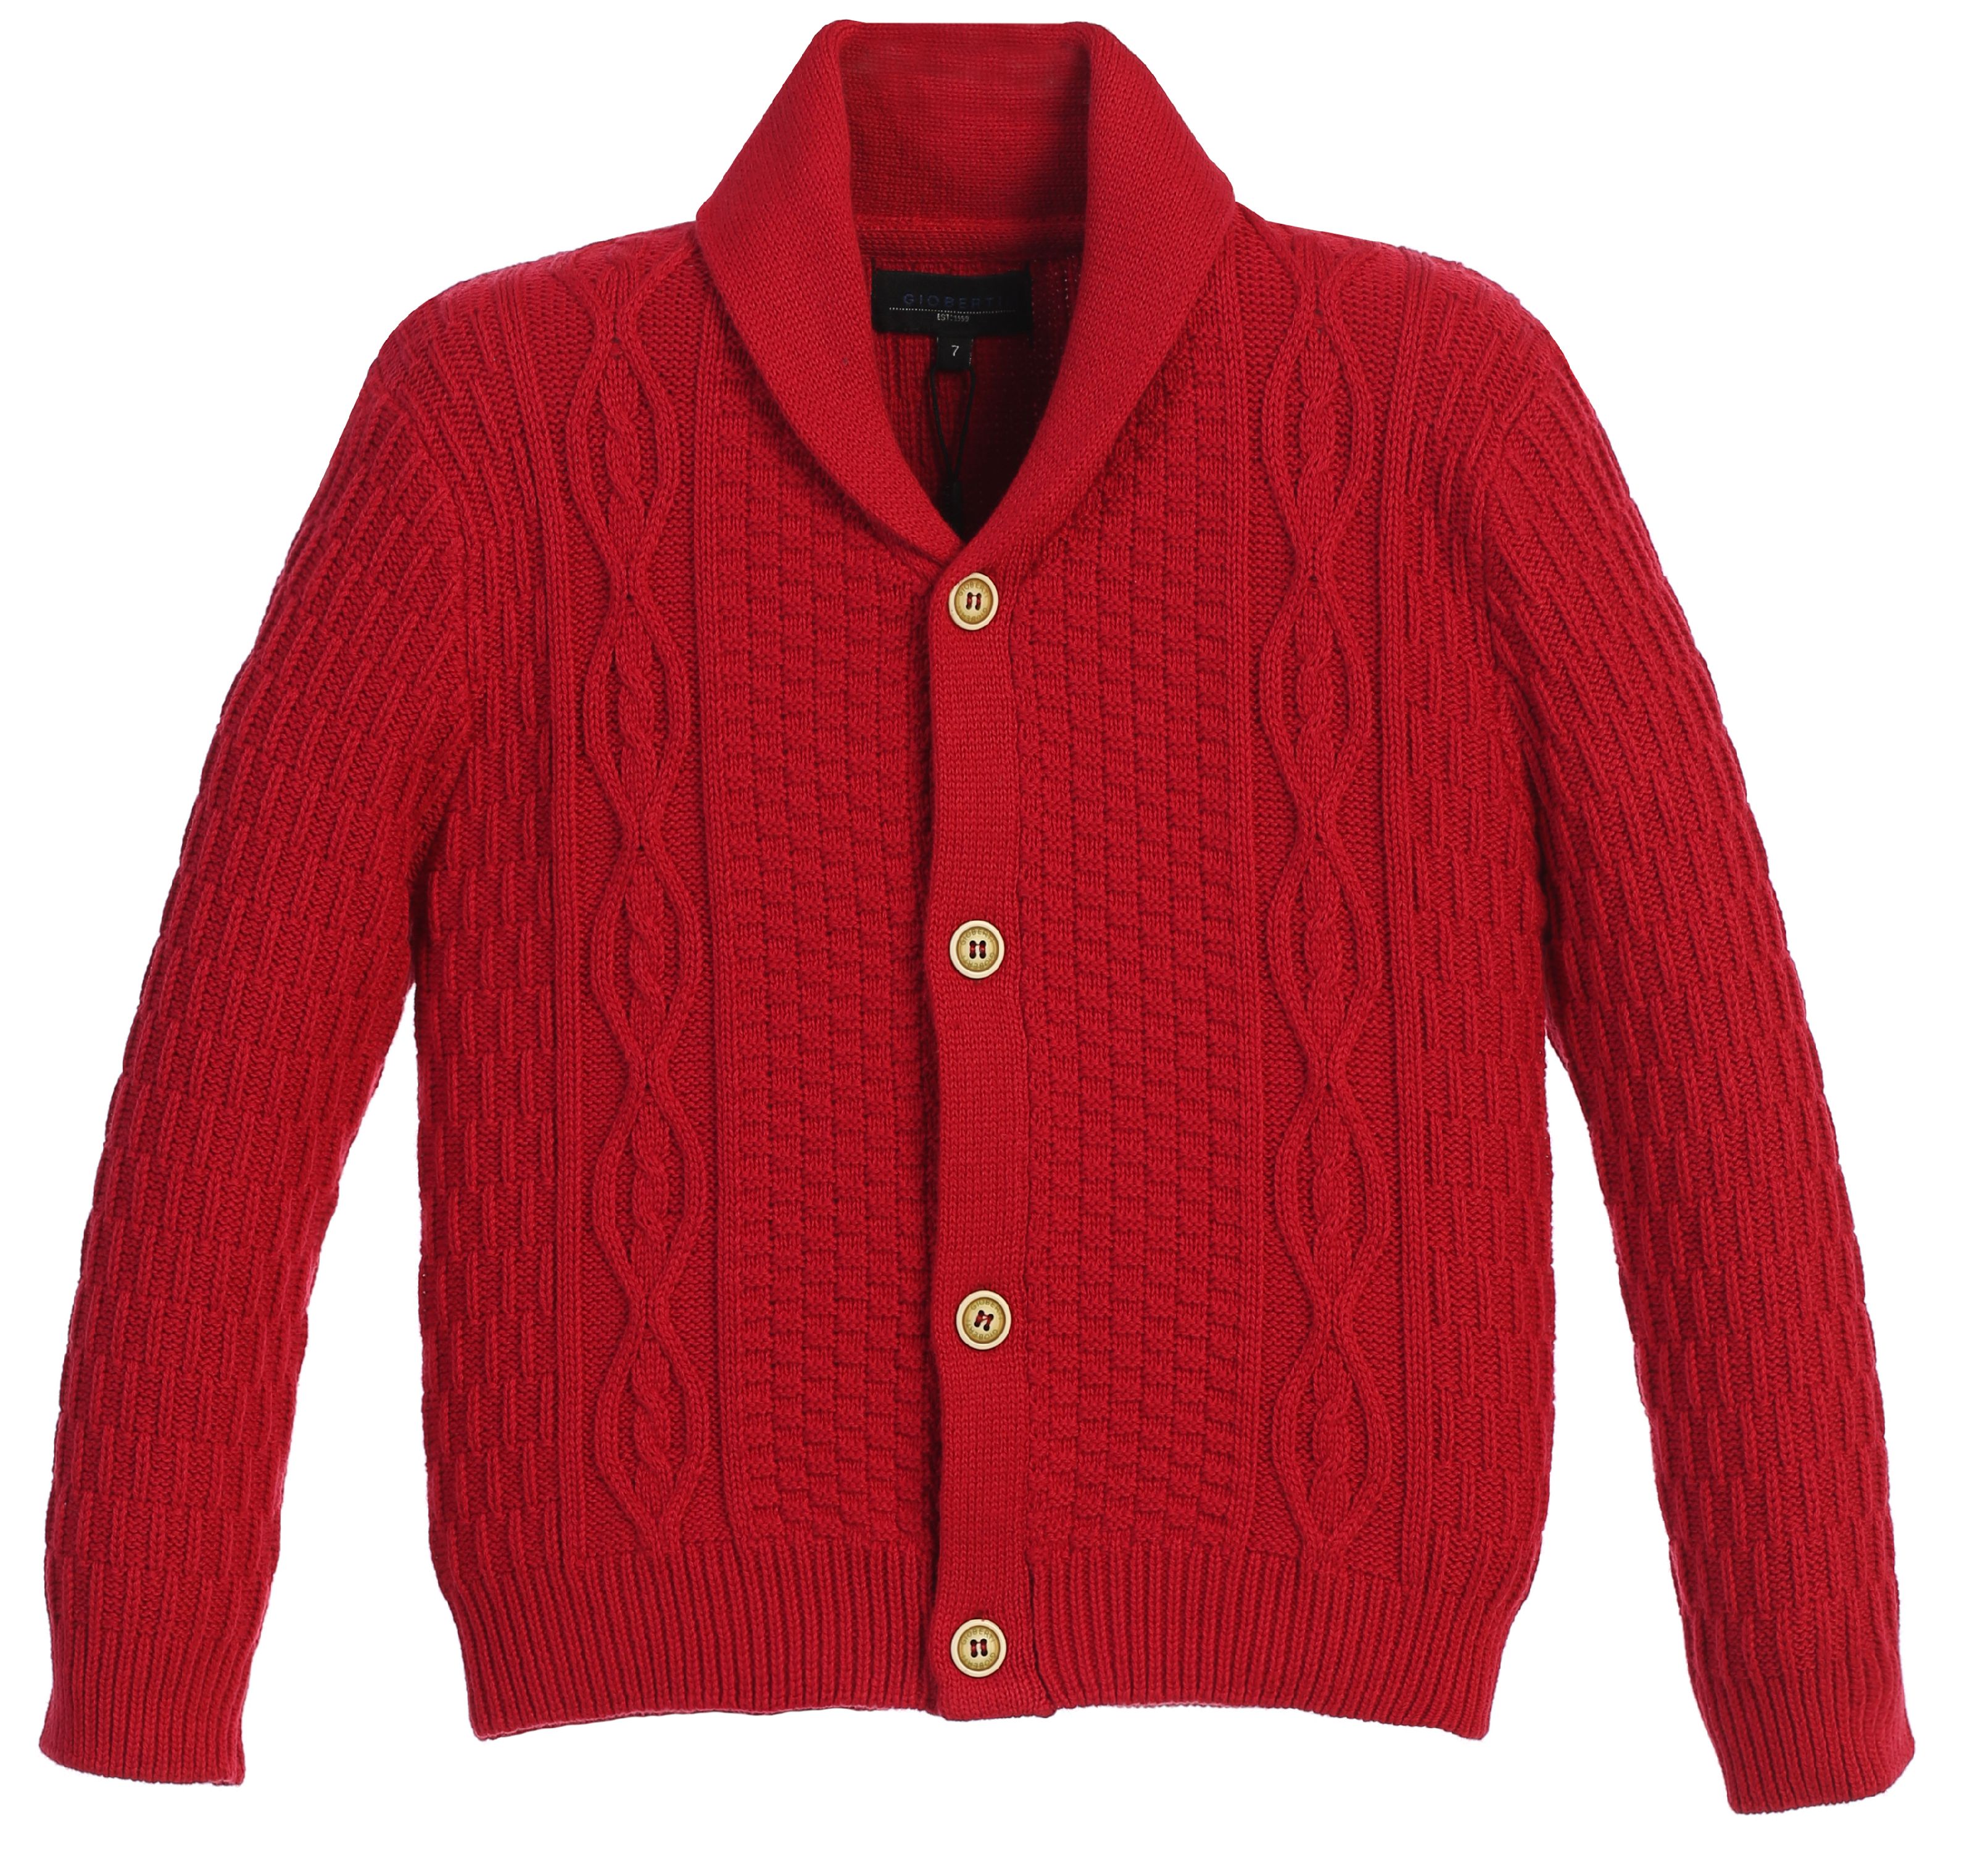 Gioberti Boys 100/% Cotton Knitted Shawl Collar Cardigan Sweater